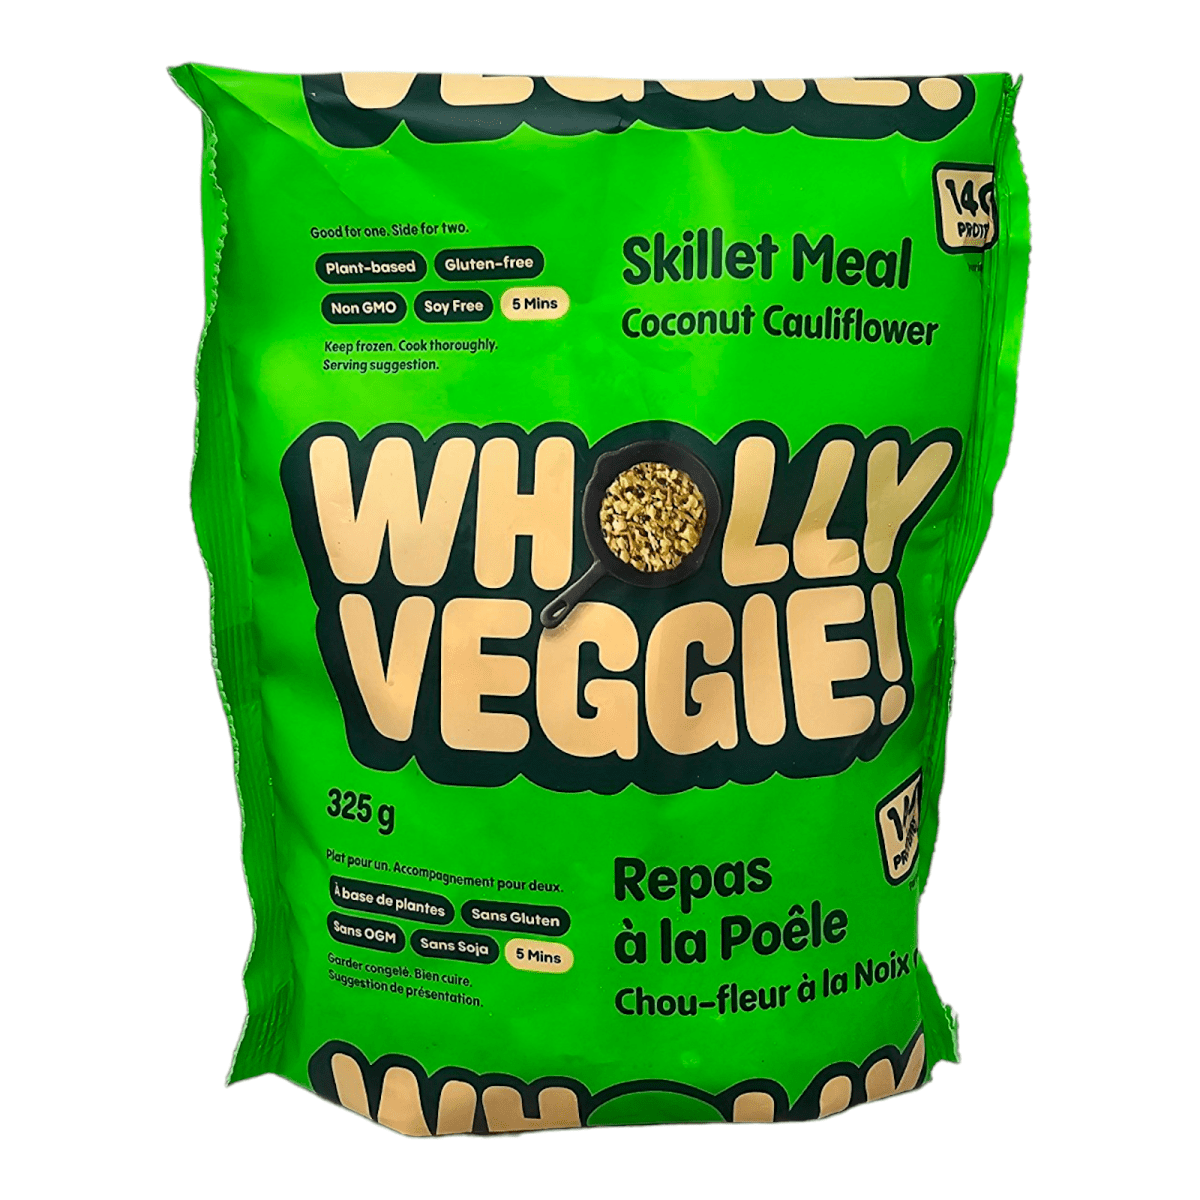 Wholly Veggie!  Skillet meal (325g)